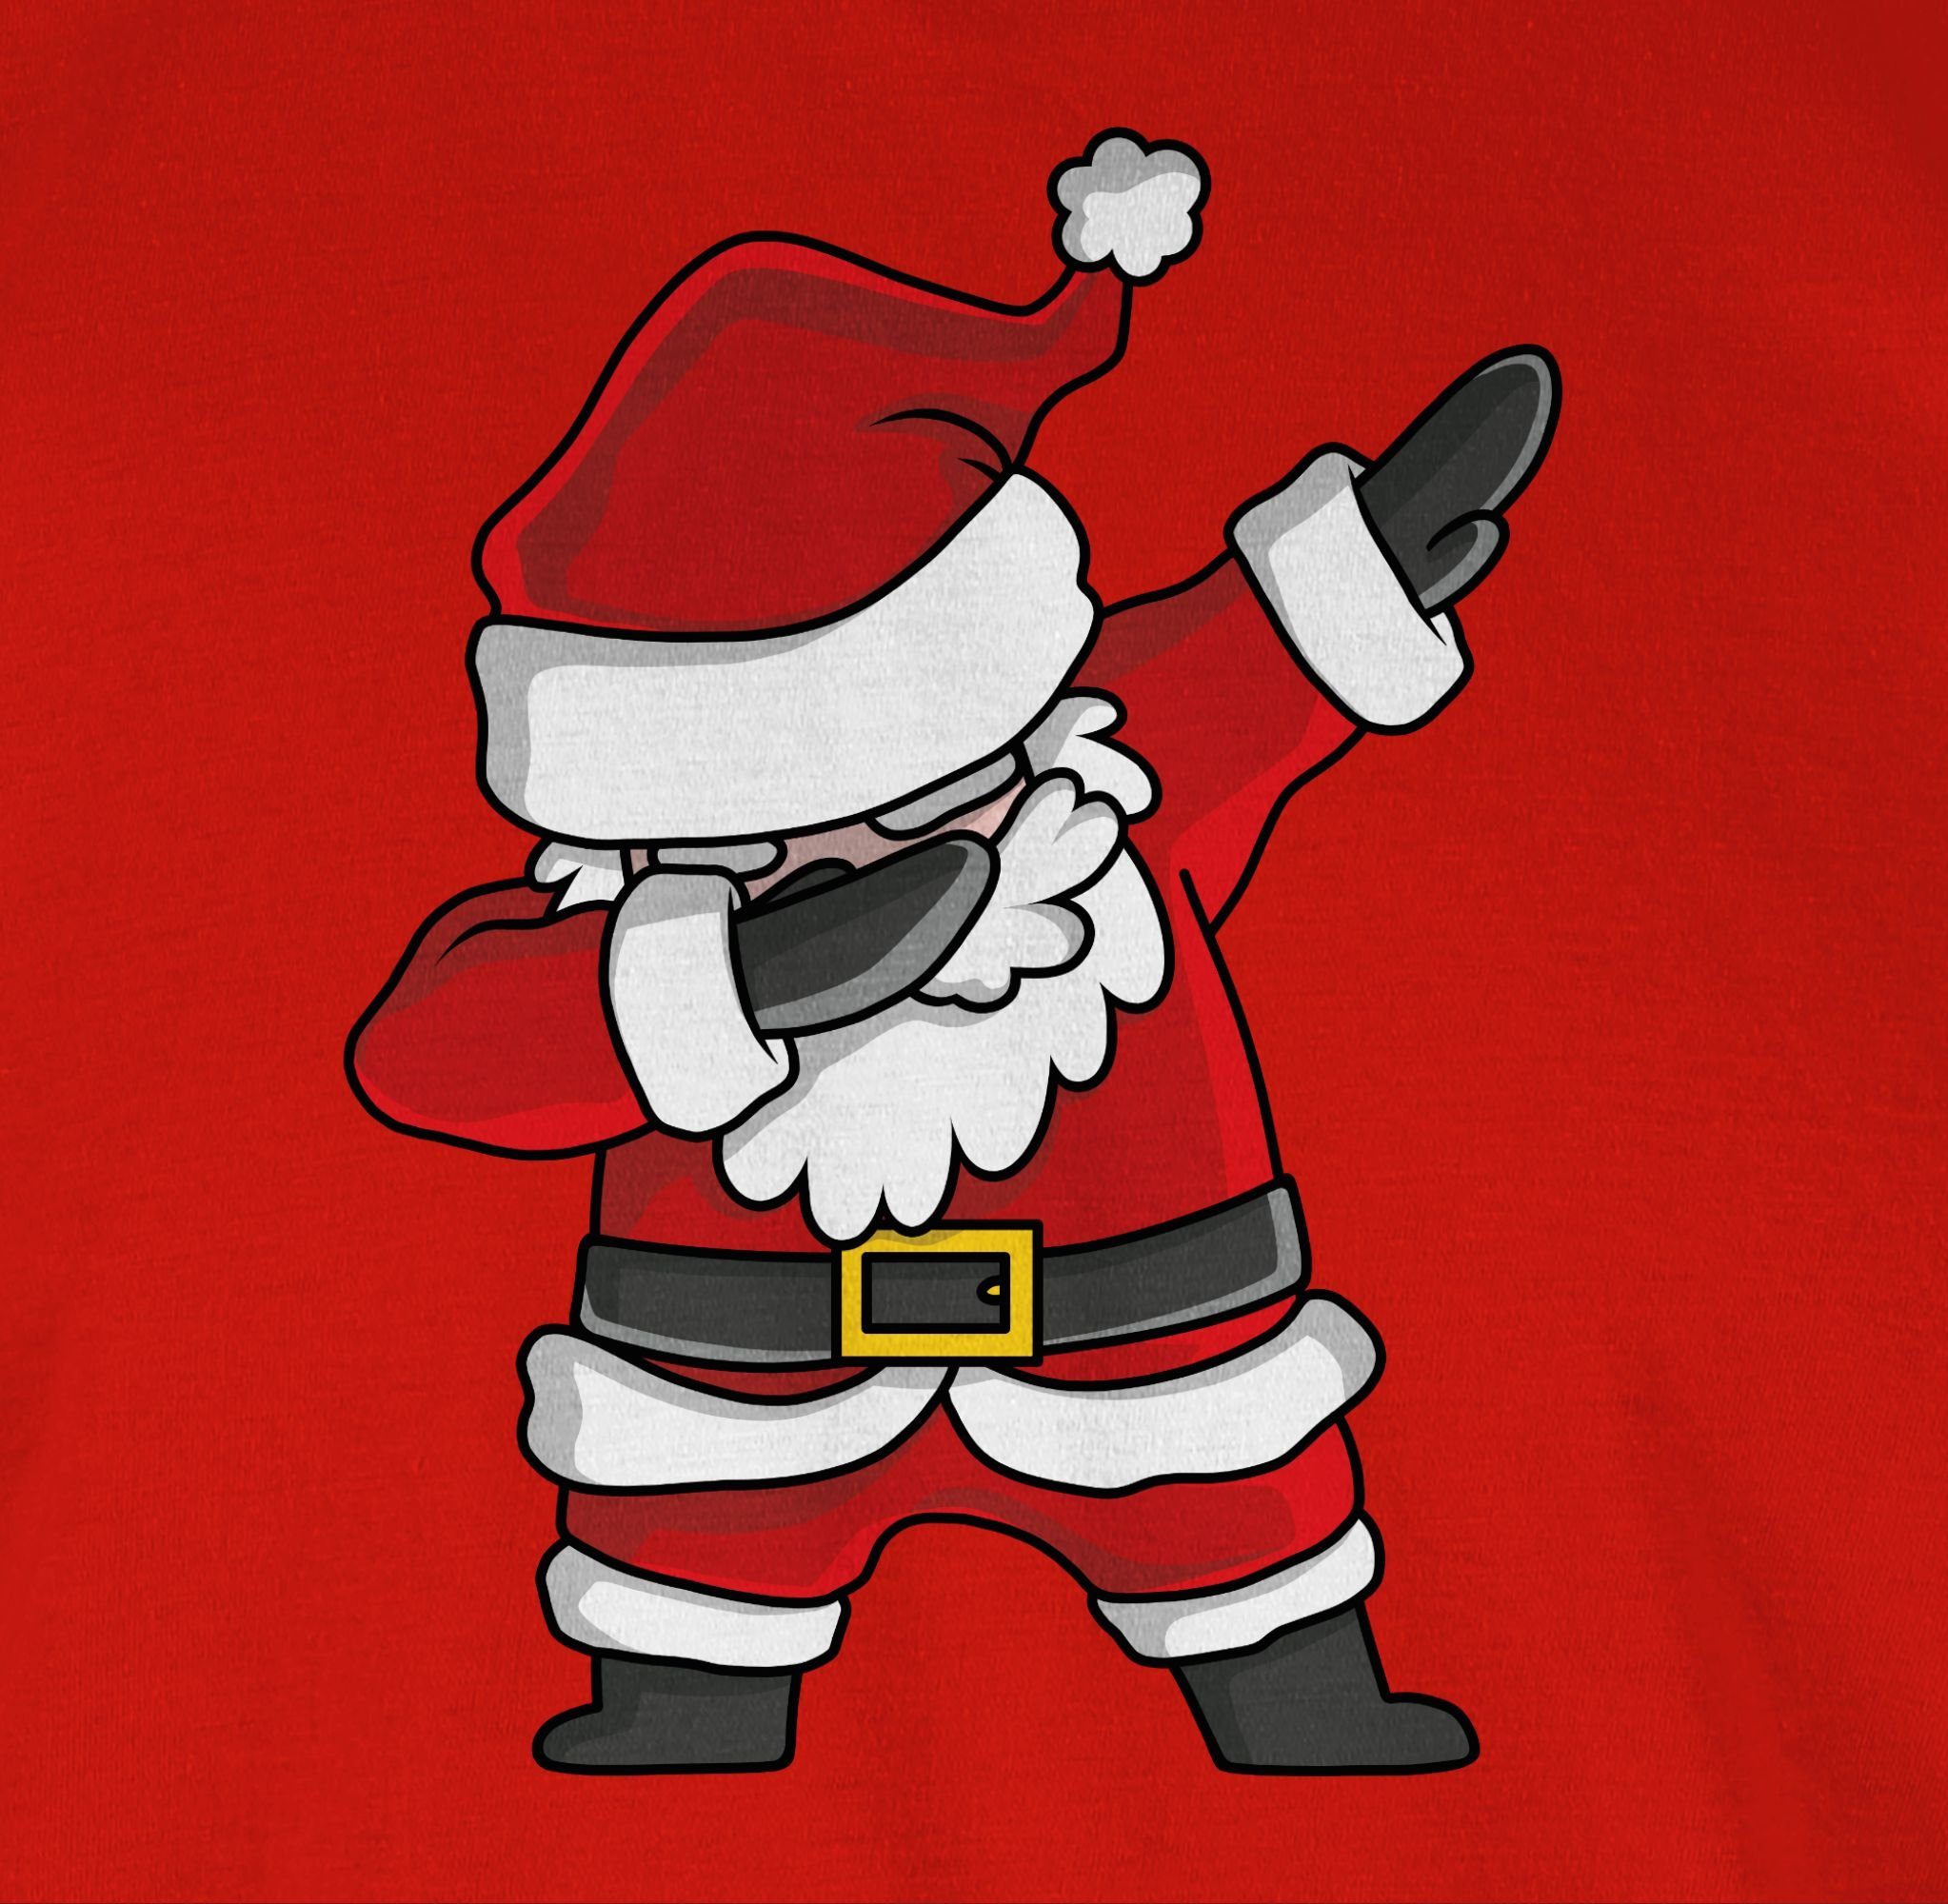 Kleidung Rot Weihnachtsmann Weihachten 2 Dabbing T-Shirt Shirtracer